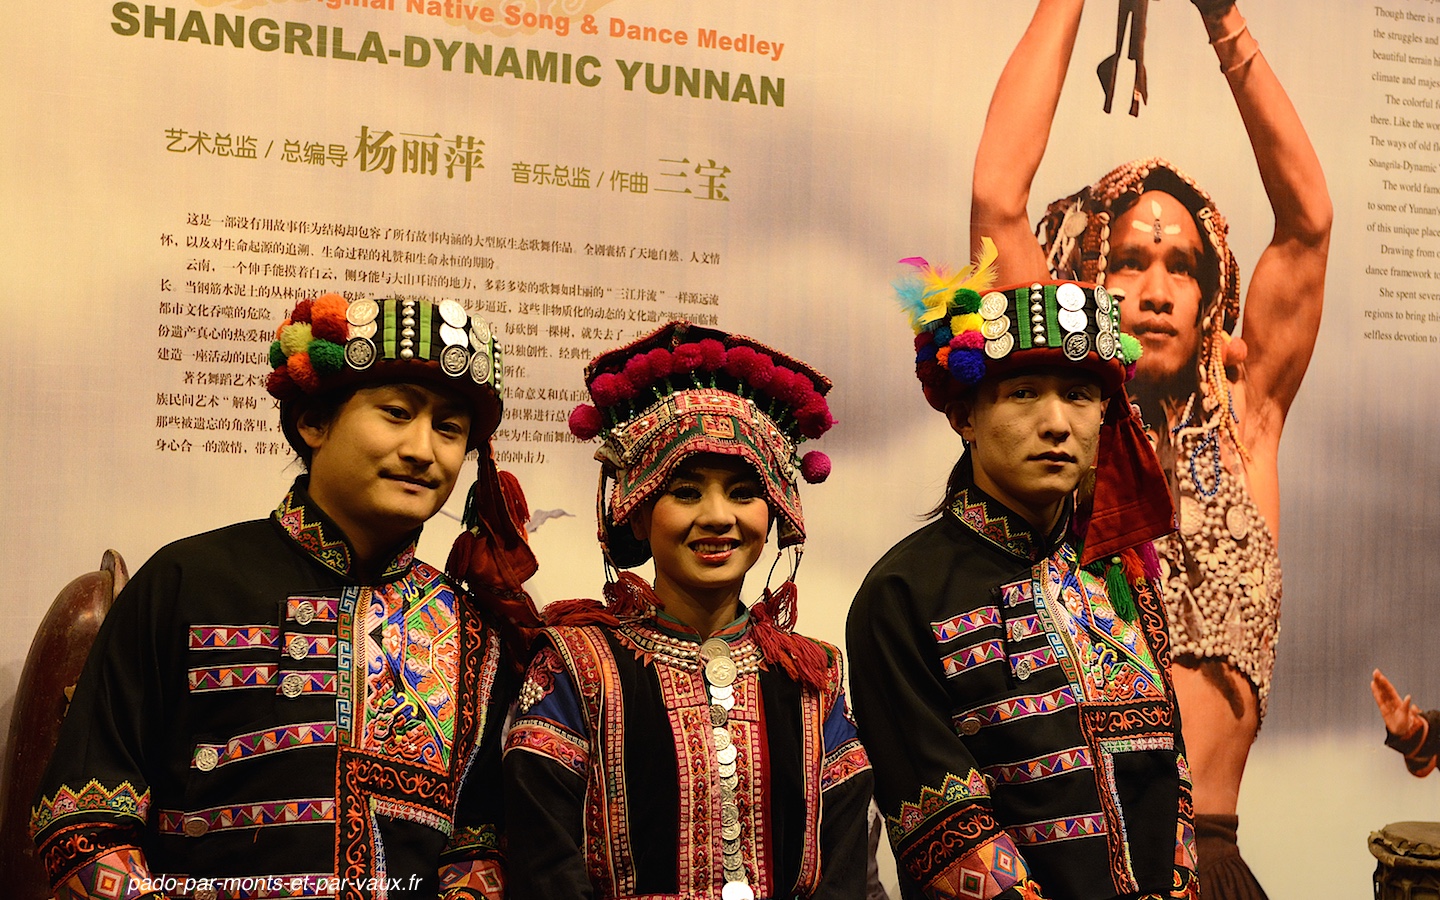 Dynamic Yunnan